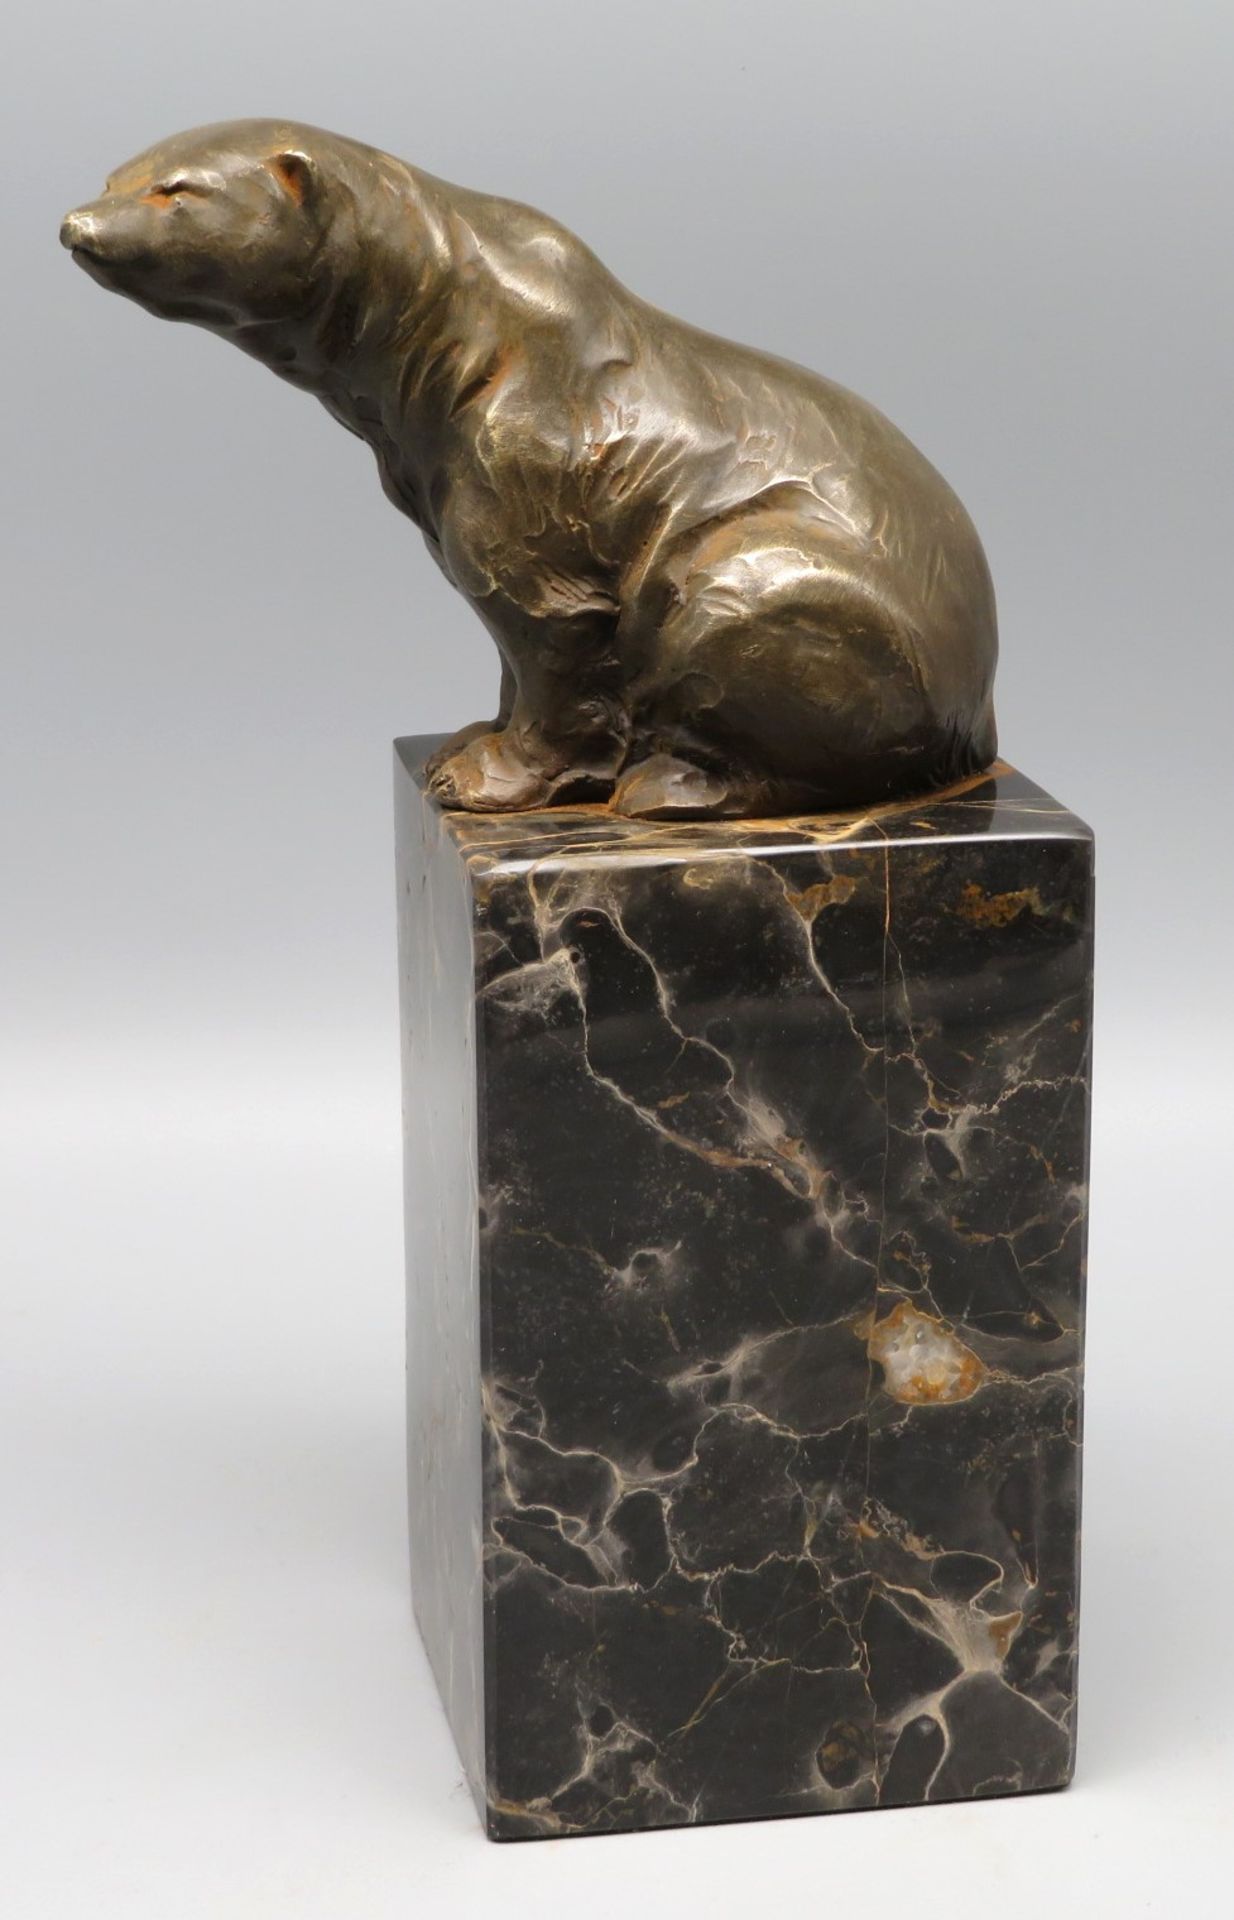 Sitzender Bär, Bronze patiniert, schwarz marmorierter Marmorsockel, 21,5 x 11,5 x 7,8 cm.